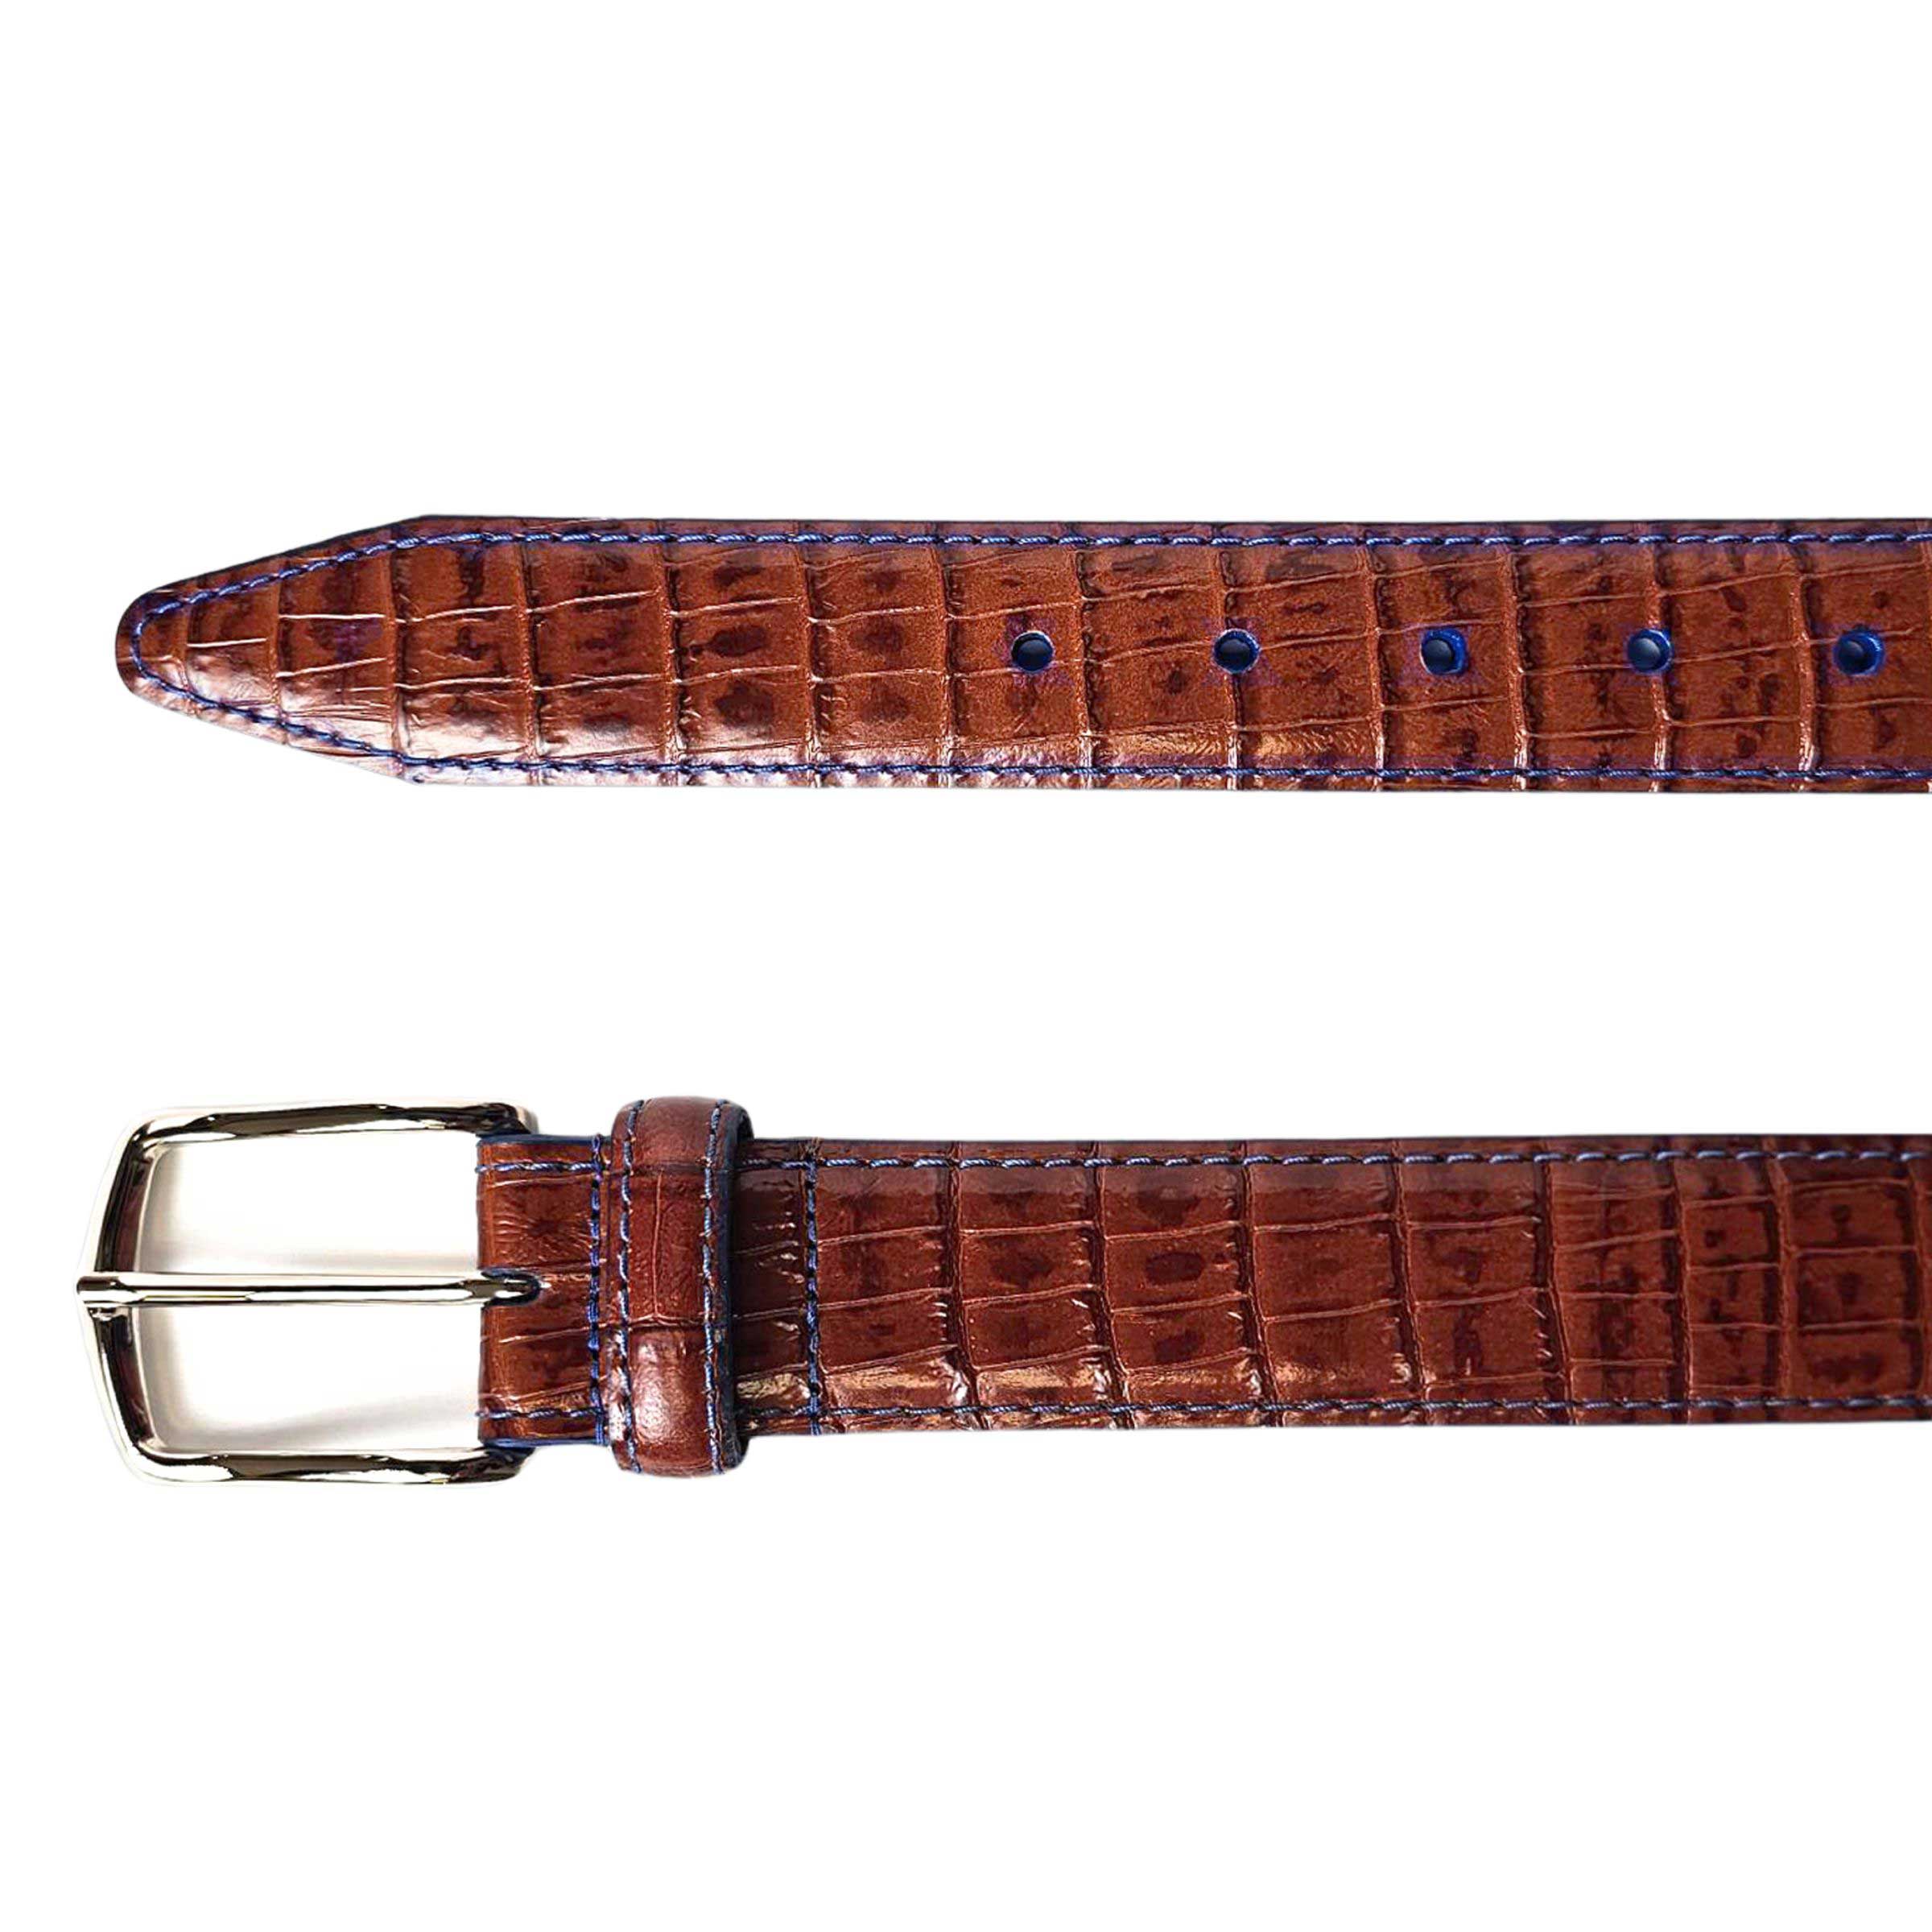 Men's tan dress belt with blue stitching